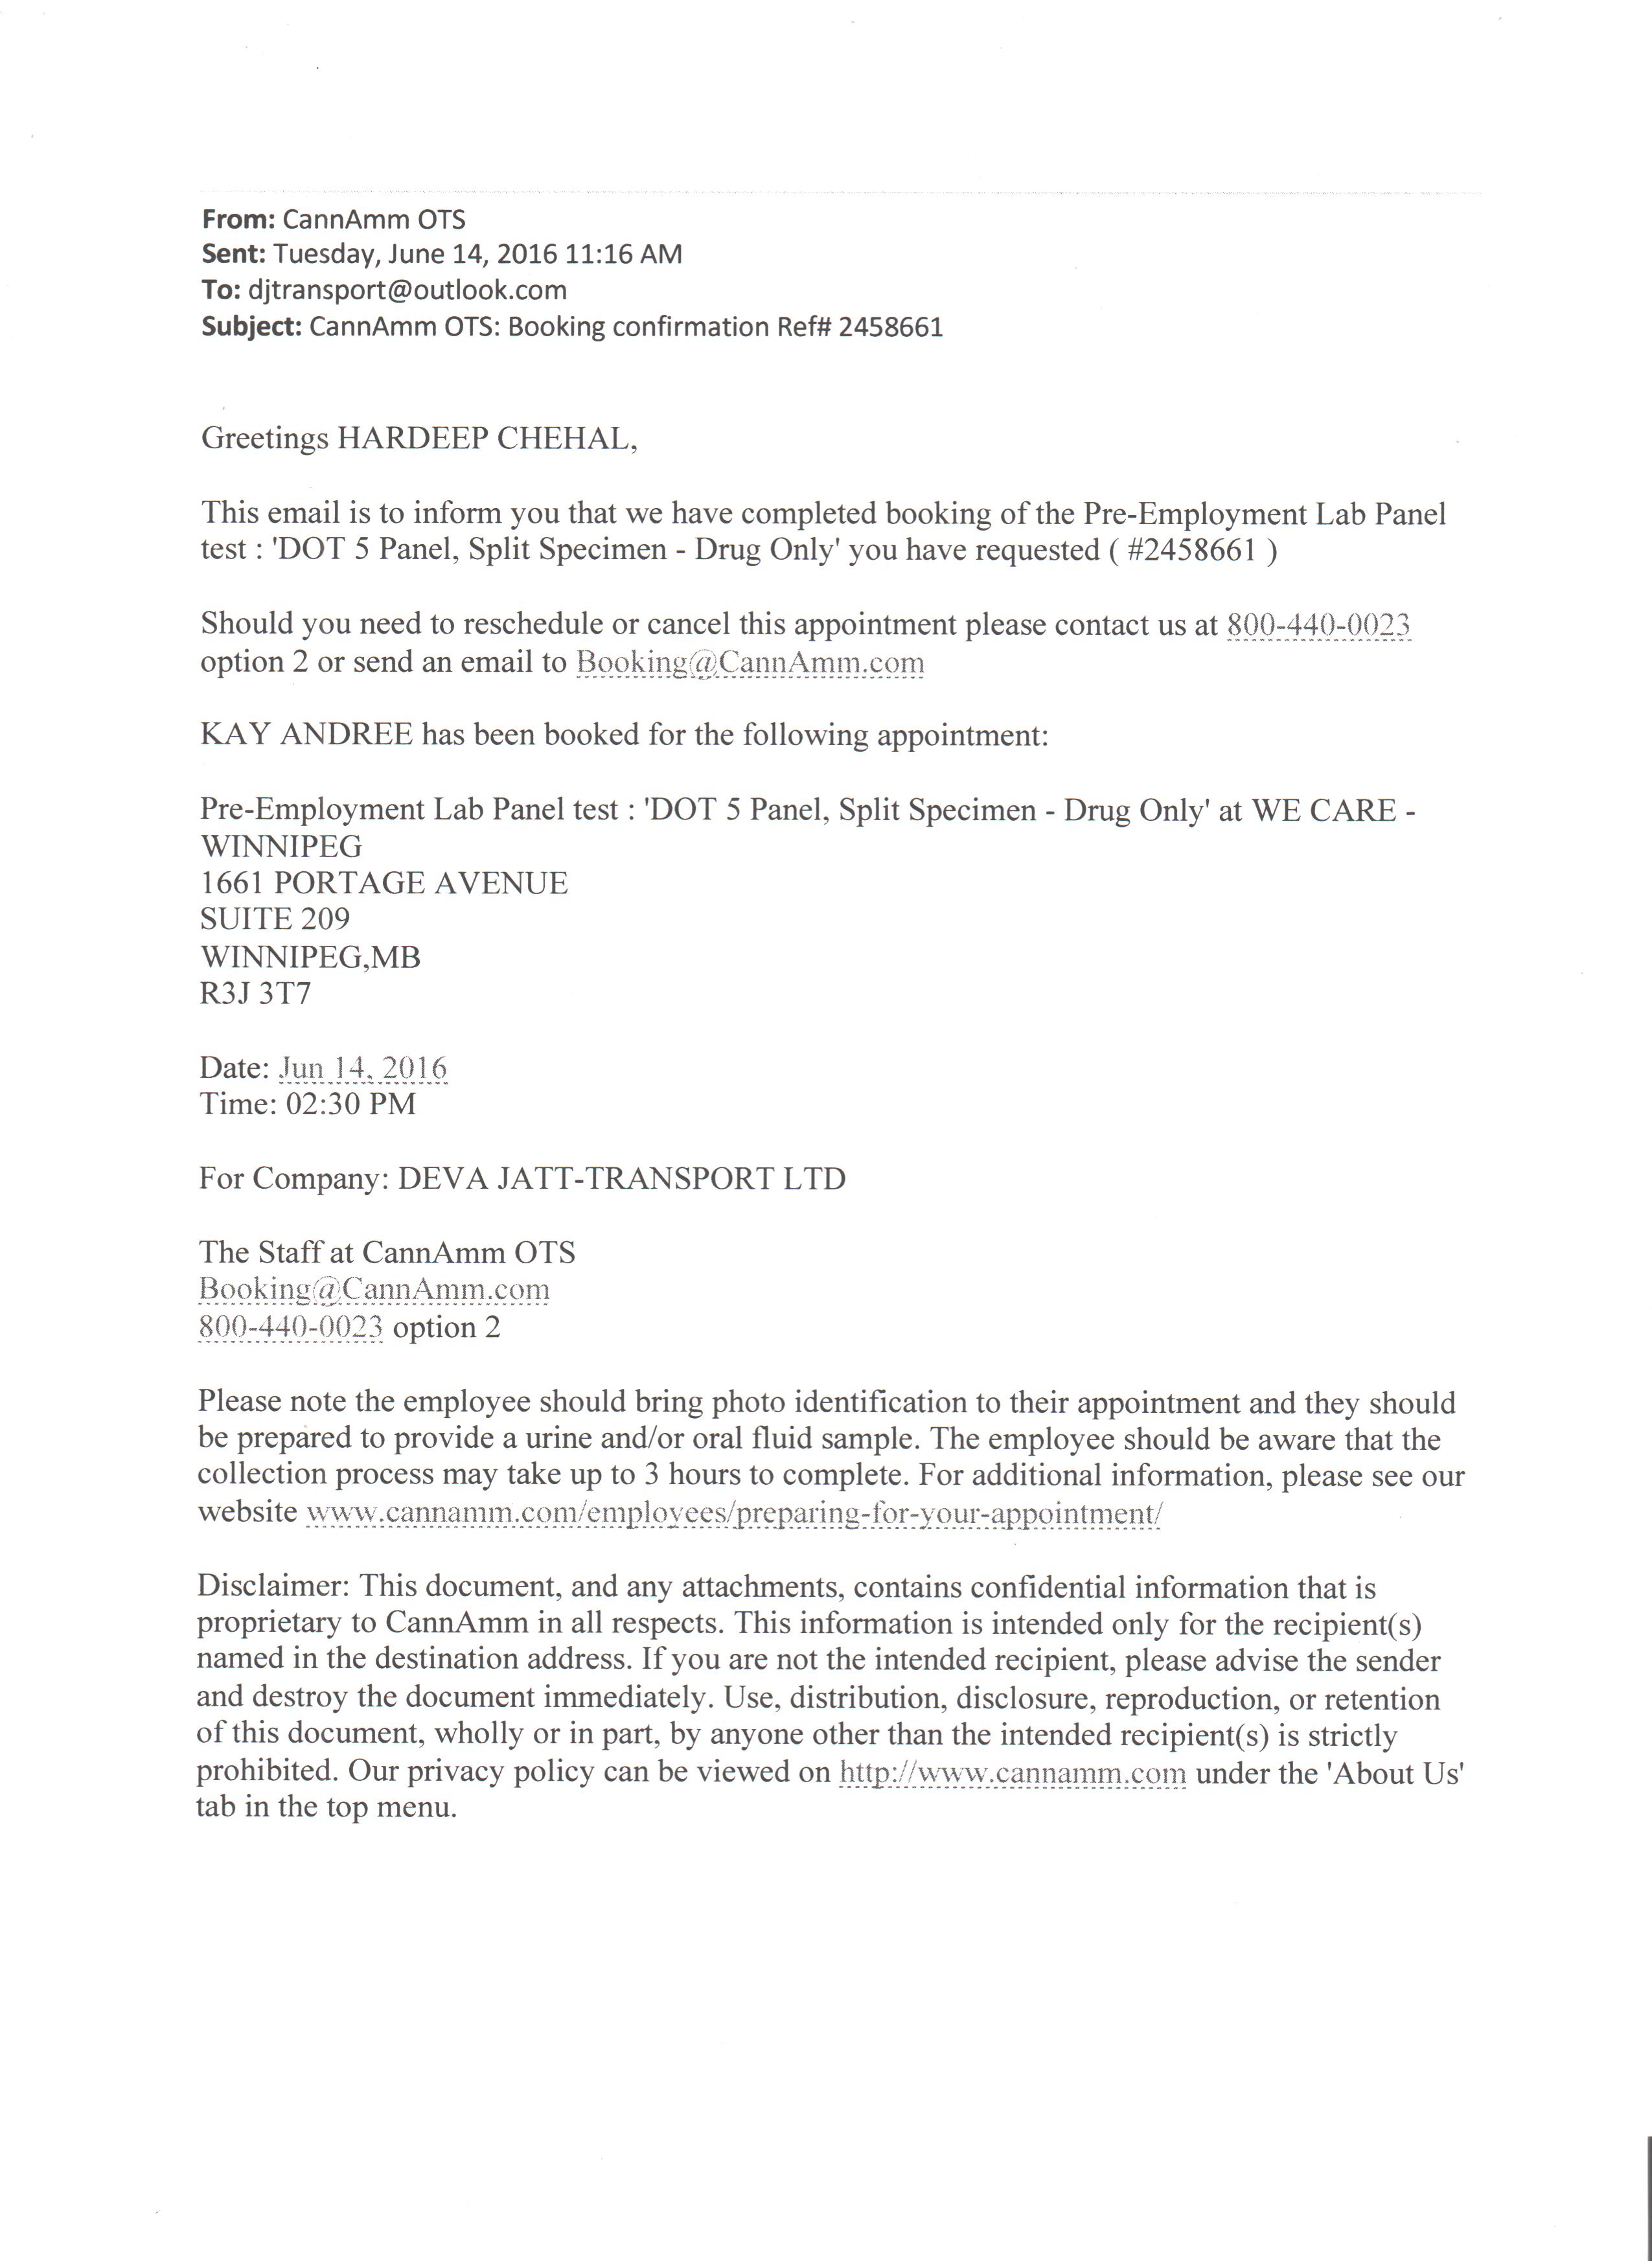 Letter from Office for making the Blood and Alcohol test for  DEVAJatt Transport Ltd.